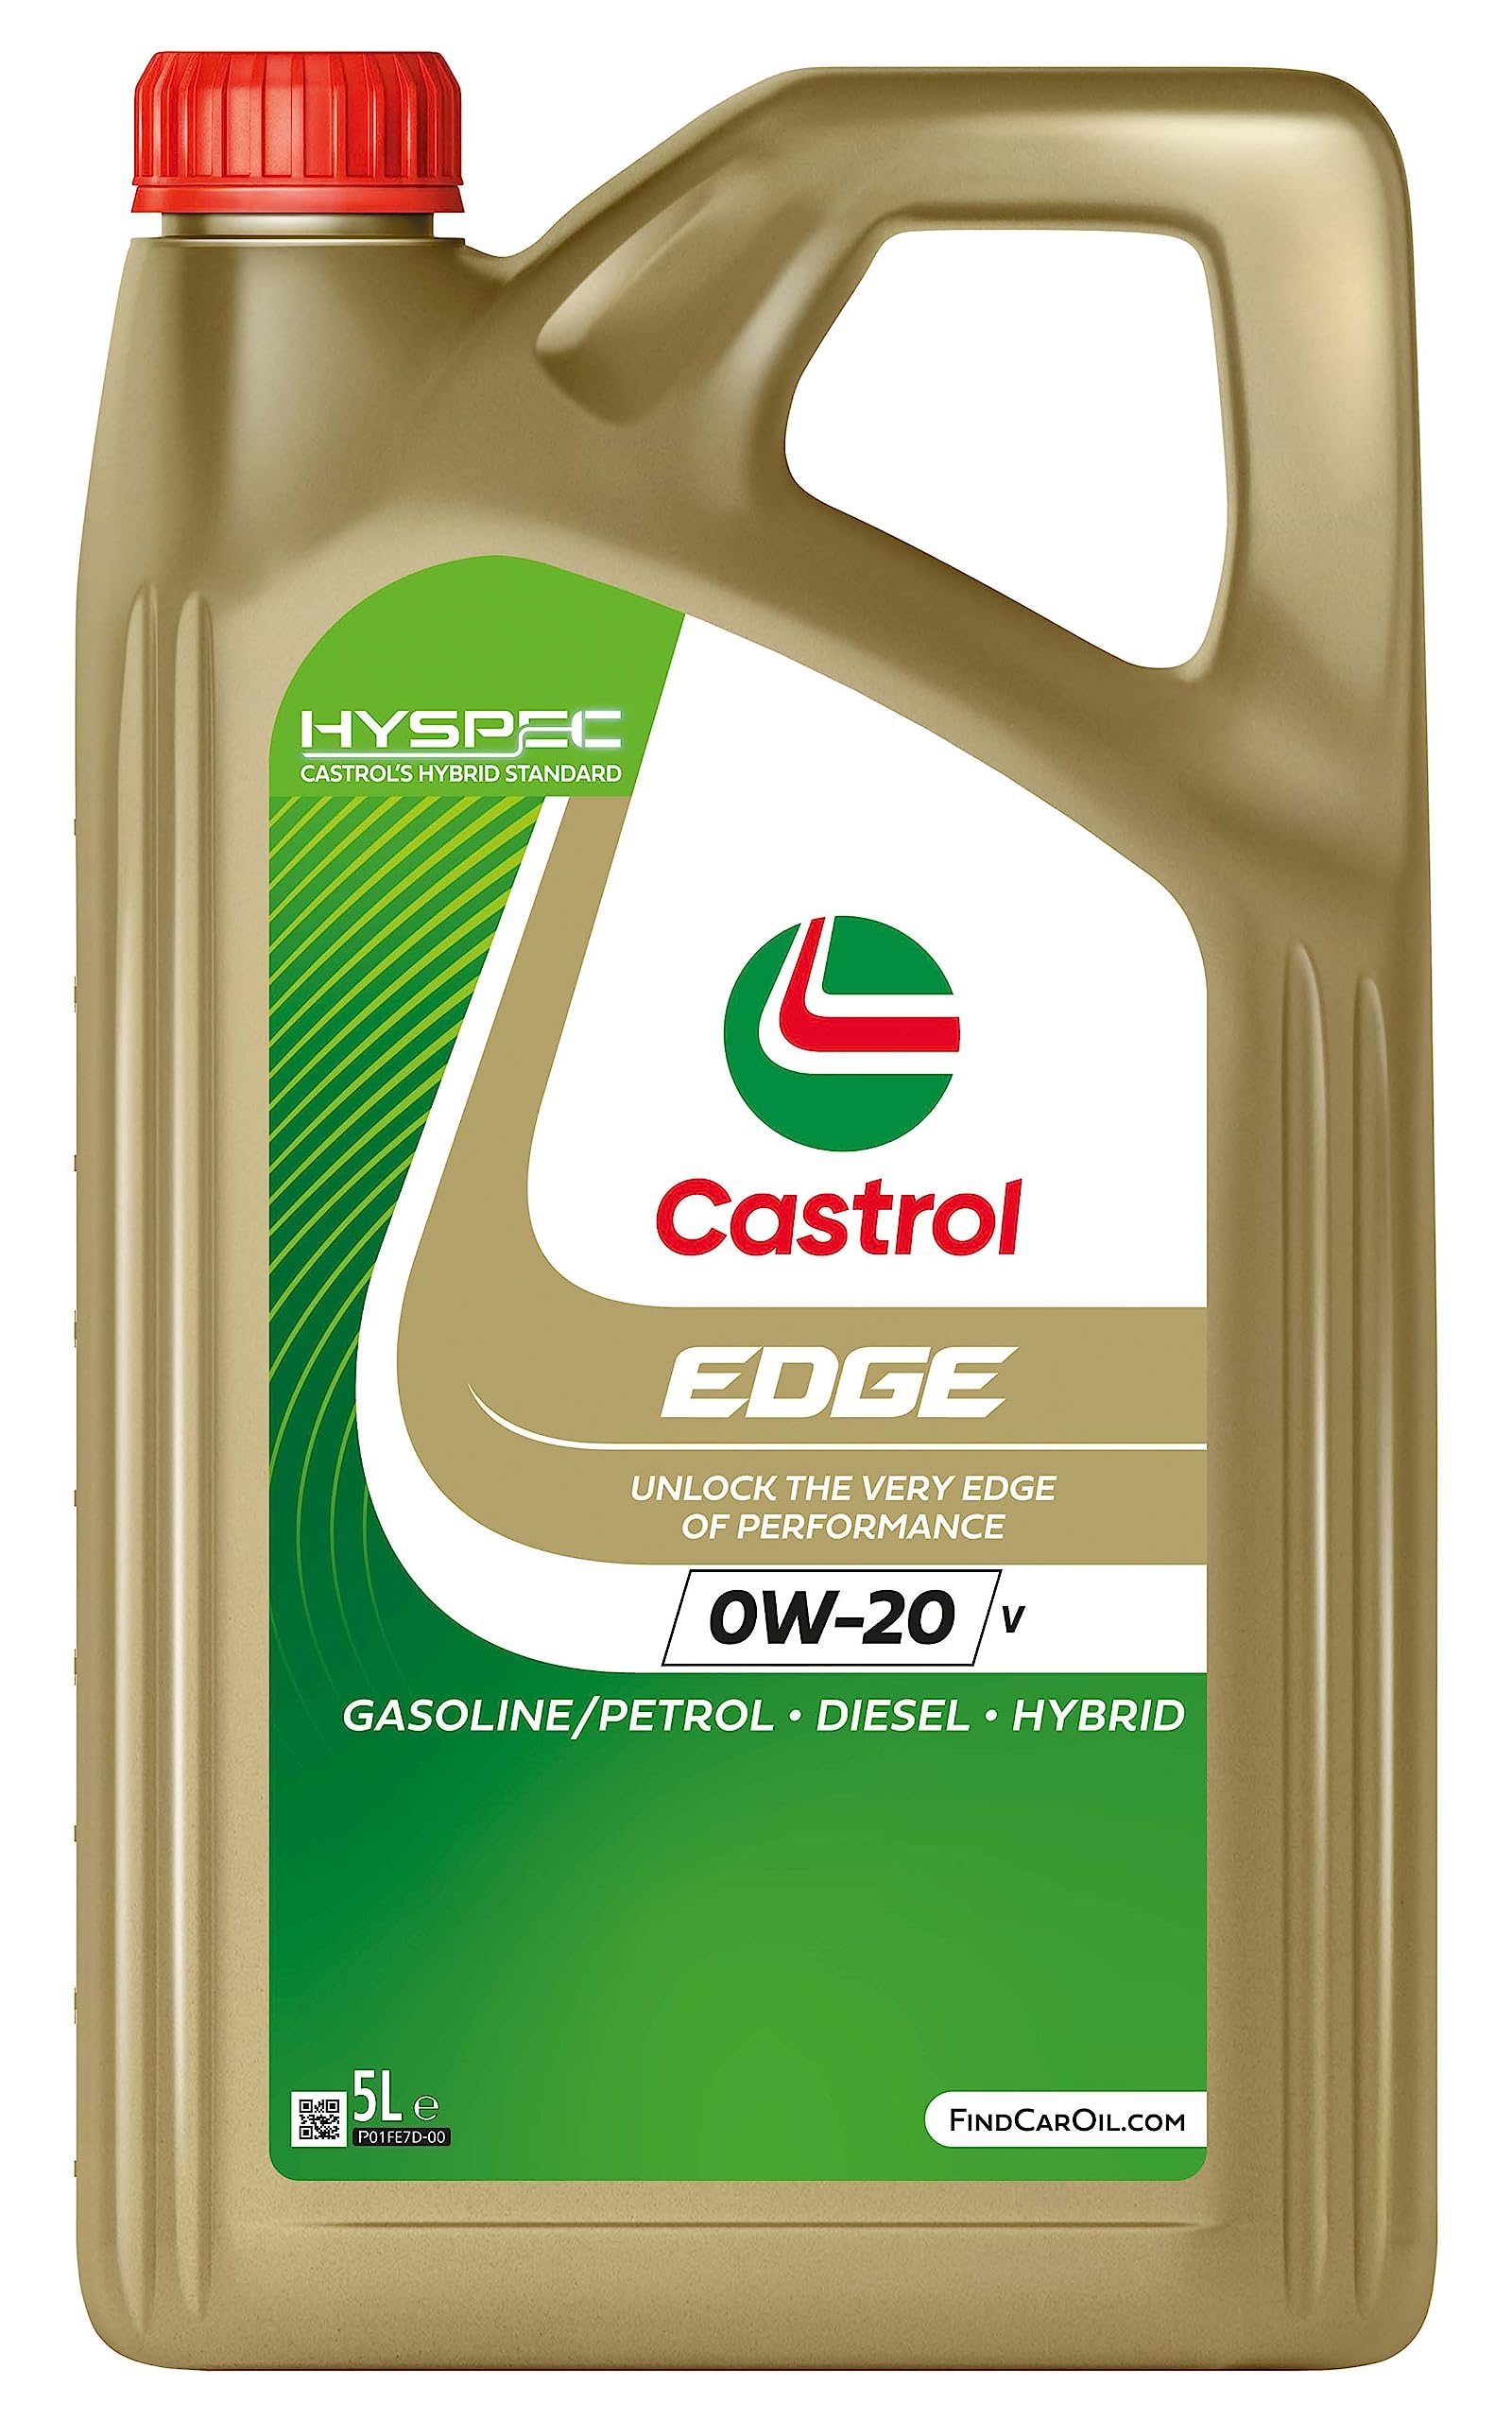 Castrol EDGE 0W-20 V Motoröl, 5L von Castrol